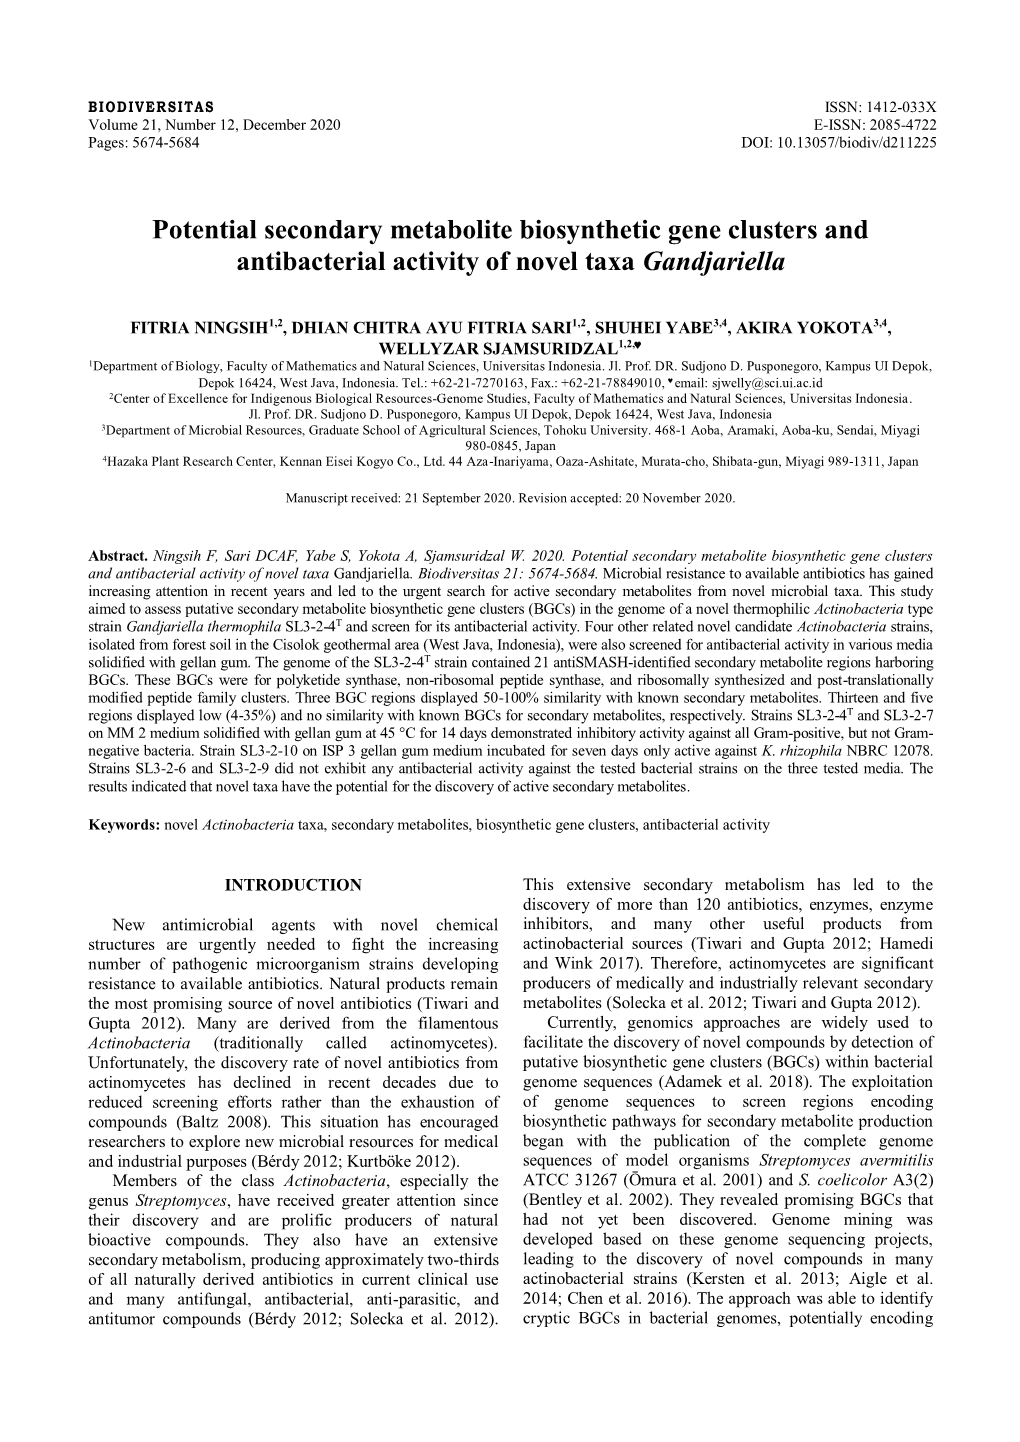 Potential Secondary Metabolite Biosynthetic Gene Clusters and Antibacterial Activity of Novel Taxa Gandjariella